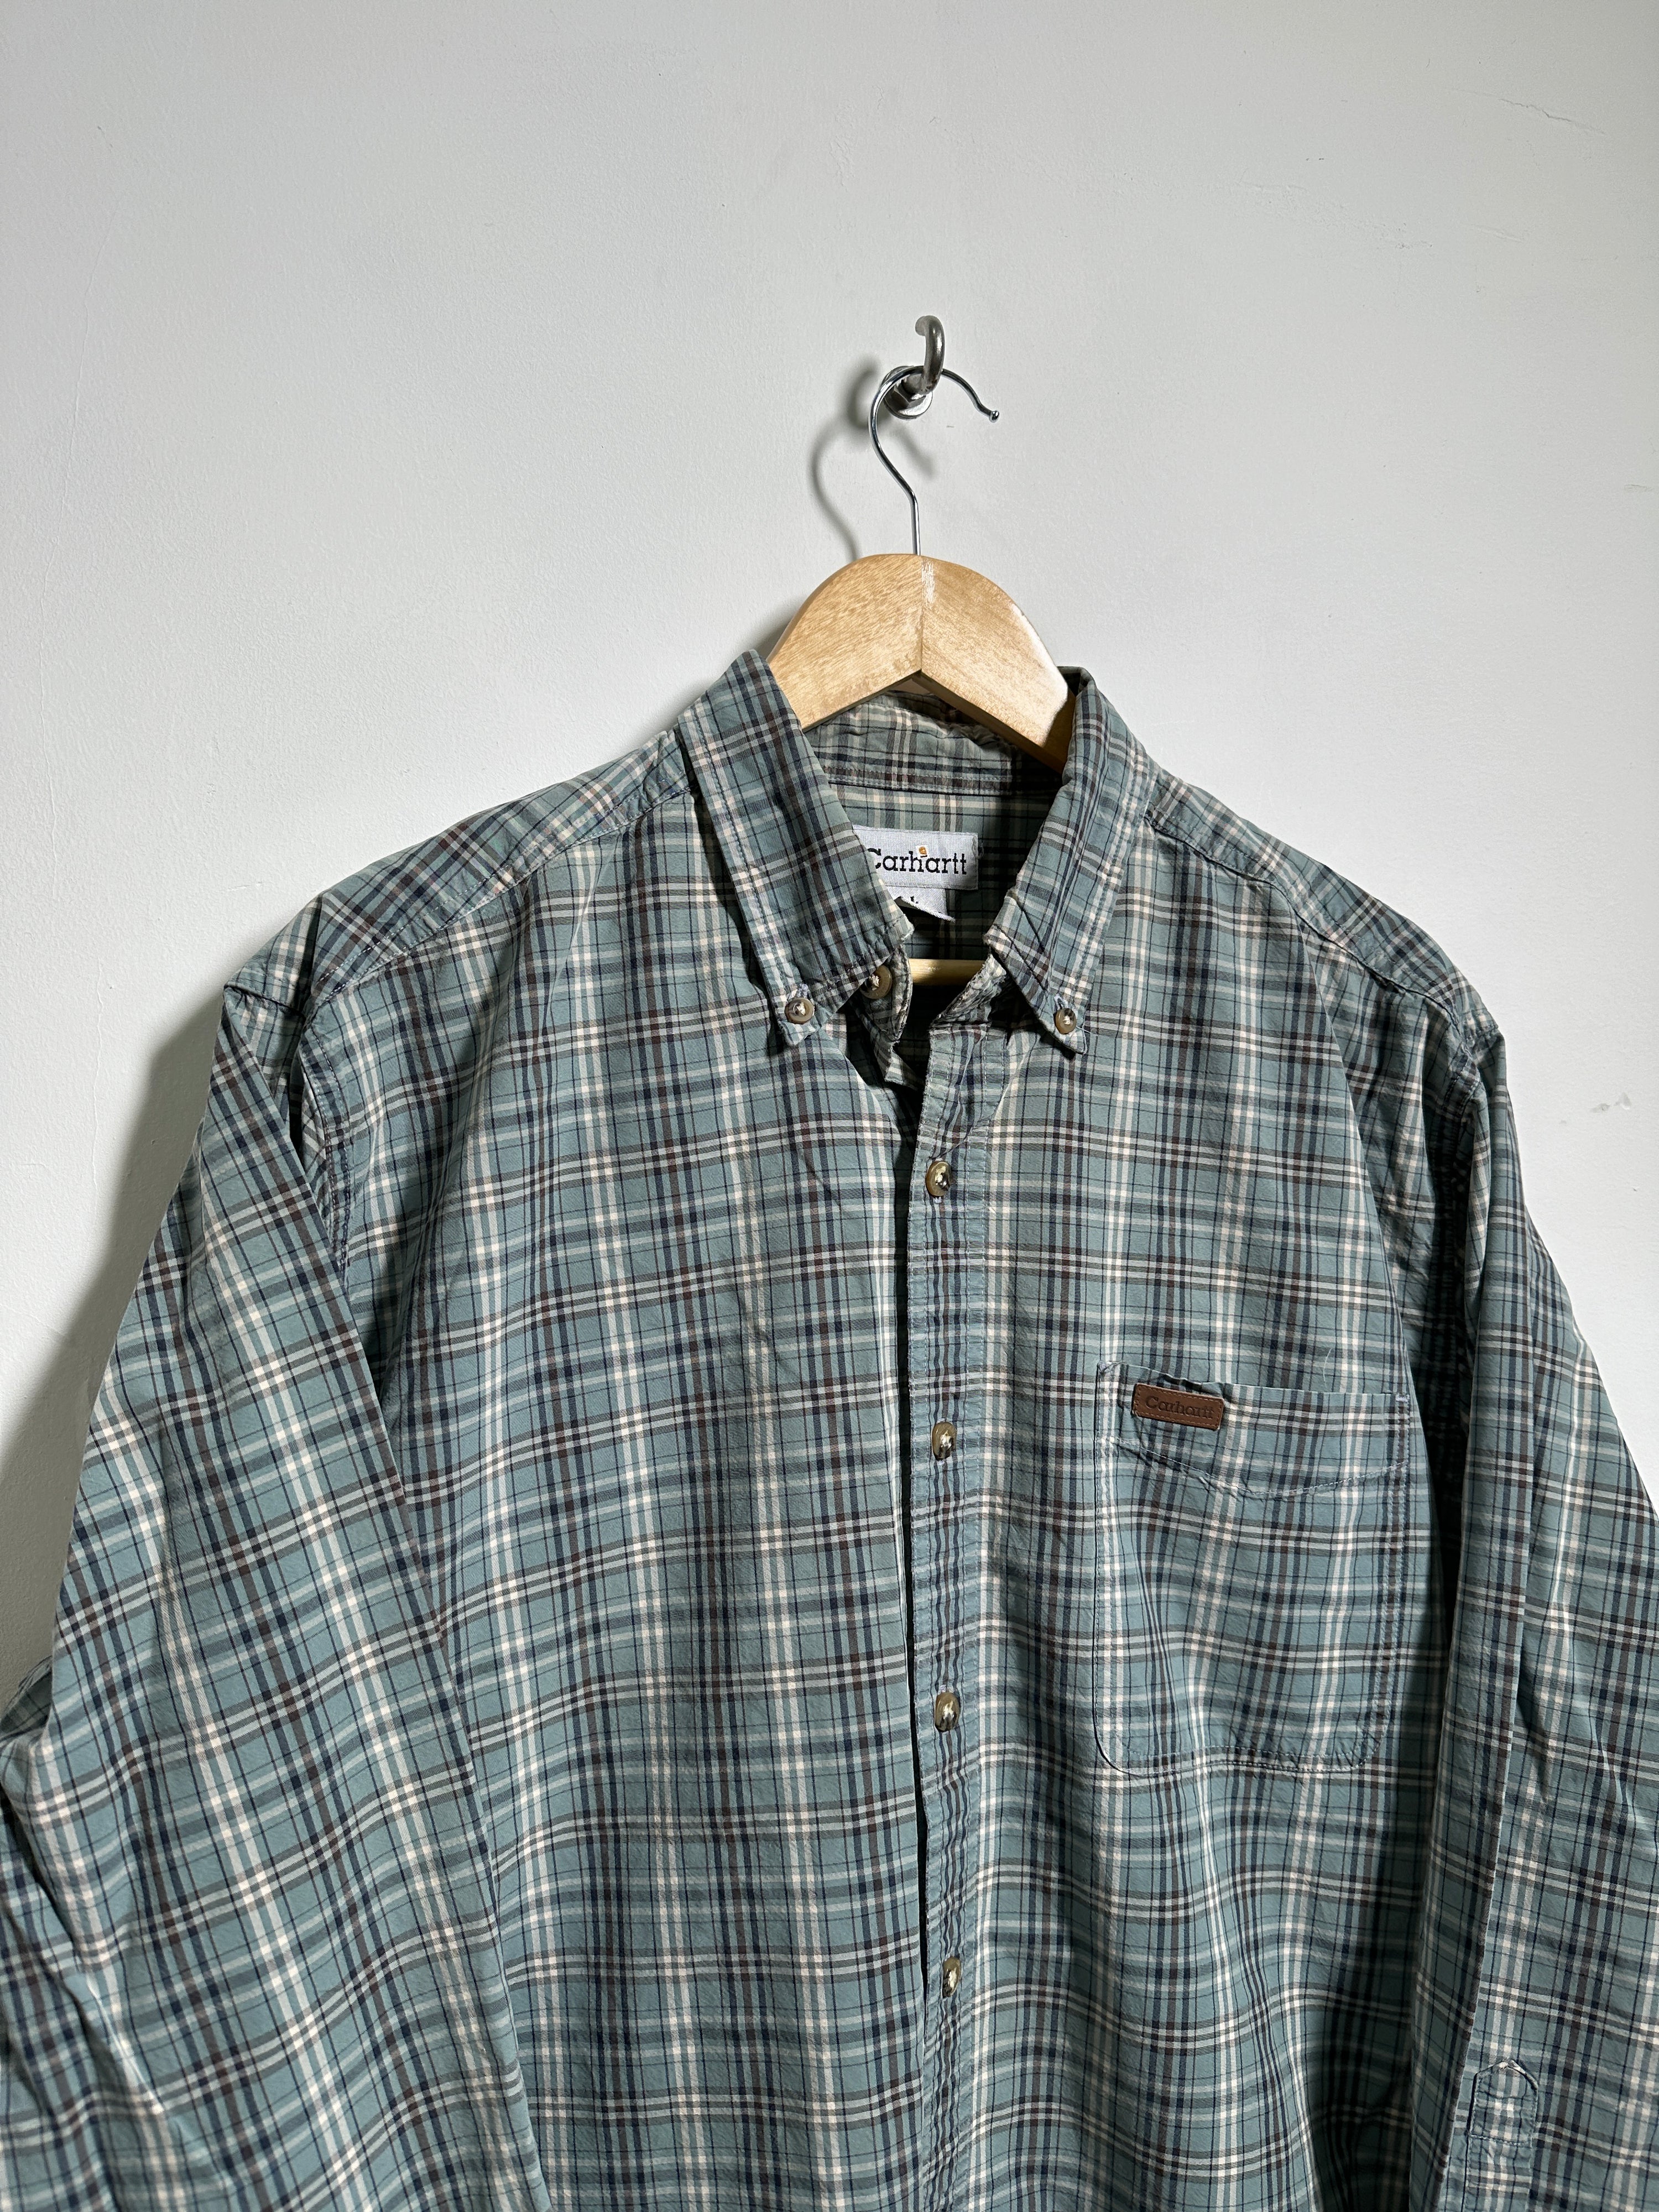 CARHARTT long-sleeve shirt with checkered pattern